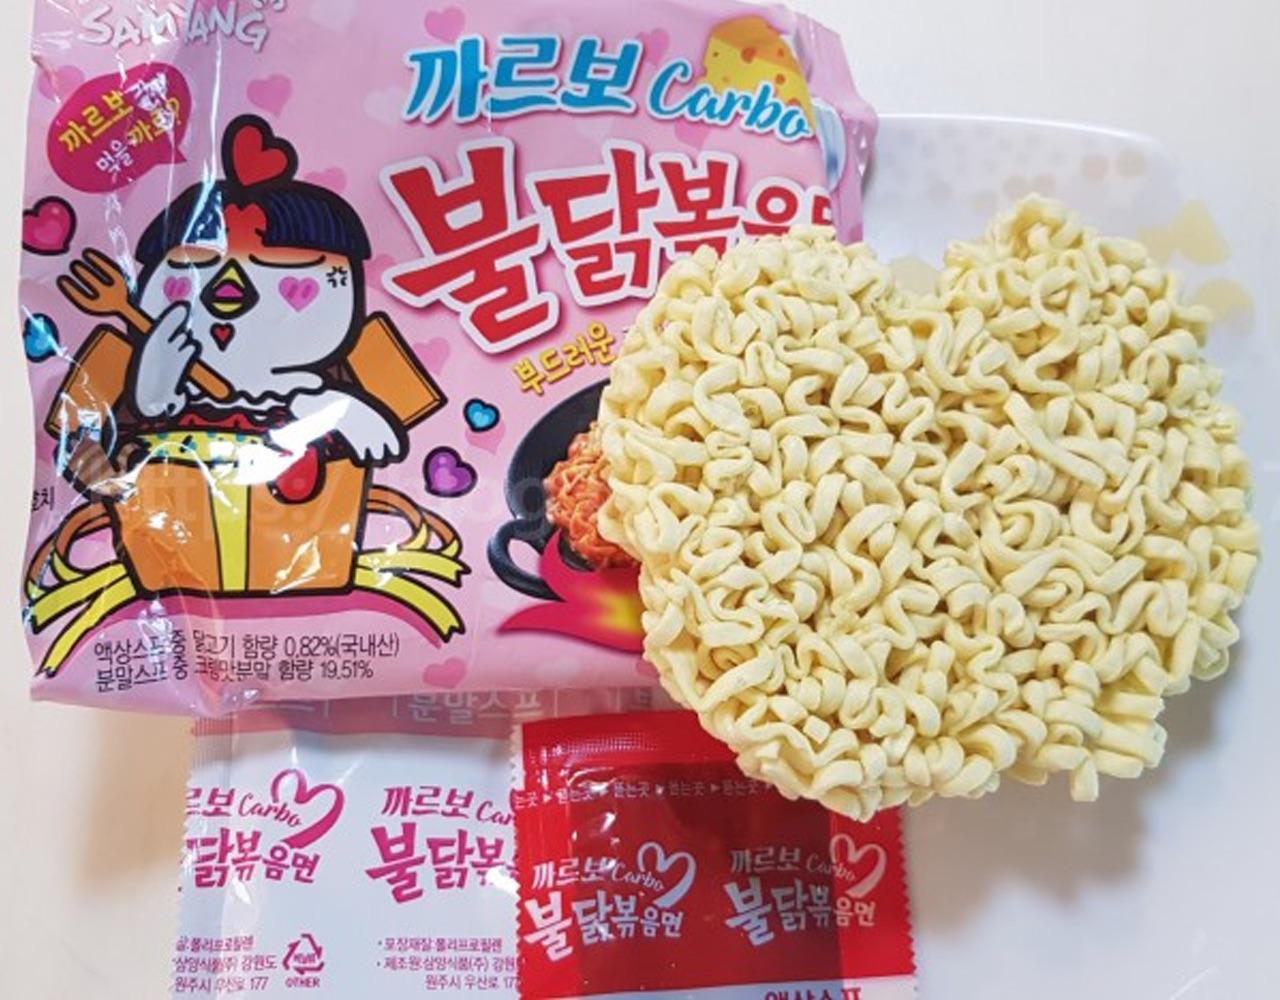 korean brand samyang buldak stirfried noodles cream carbo contents